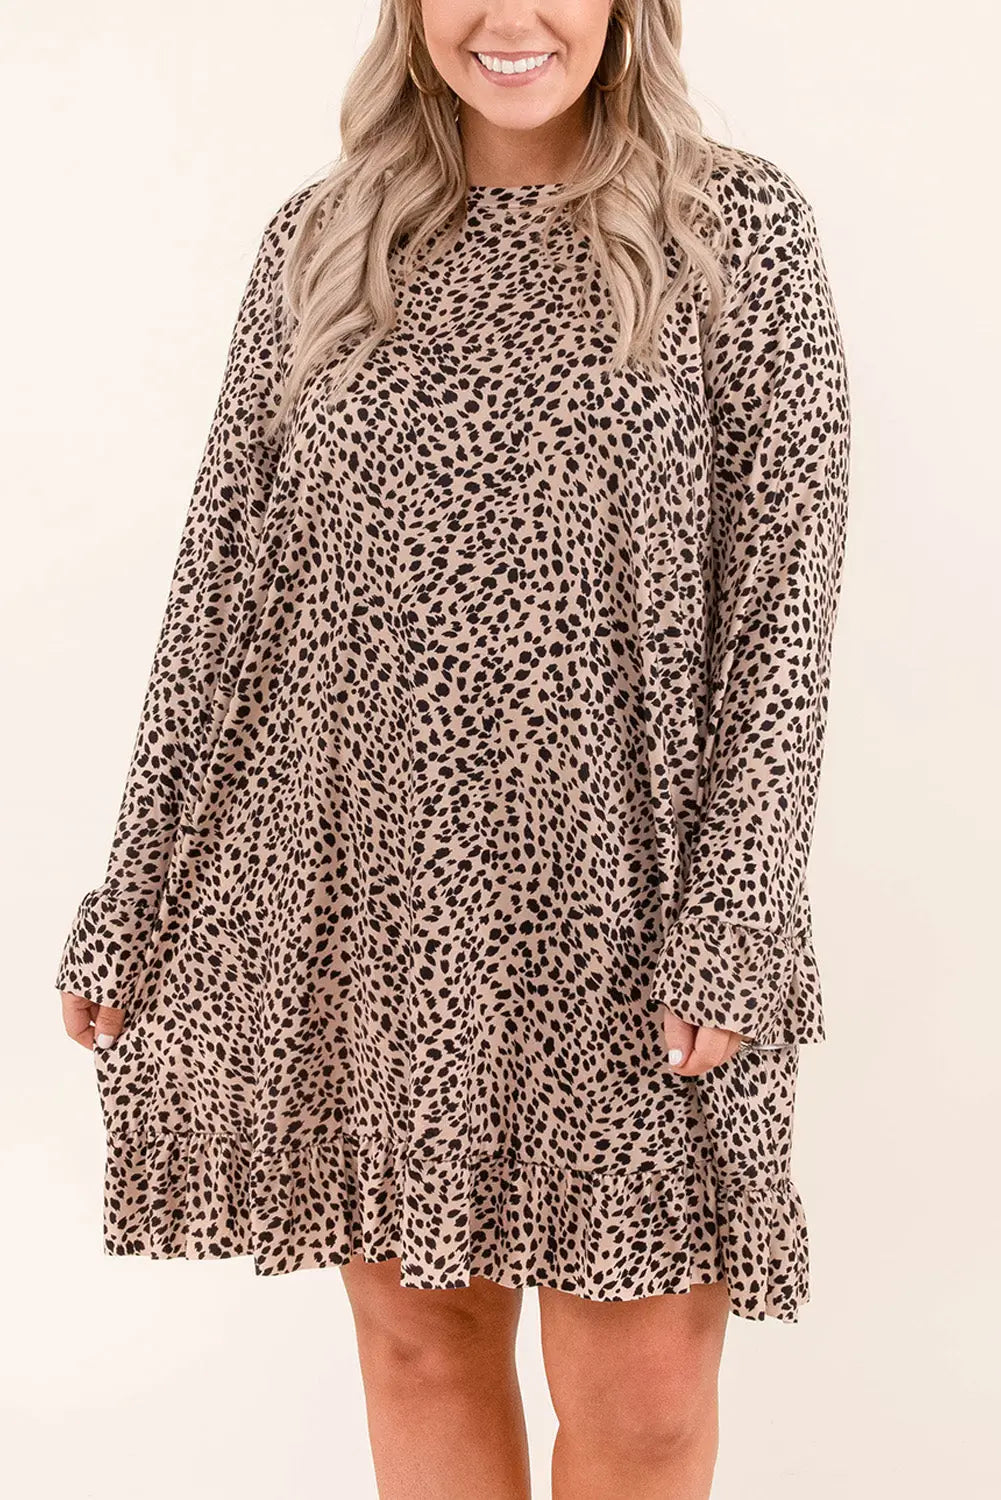 Leopard plus size ruffle long sleeve mini dress - 1x /